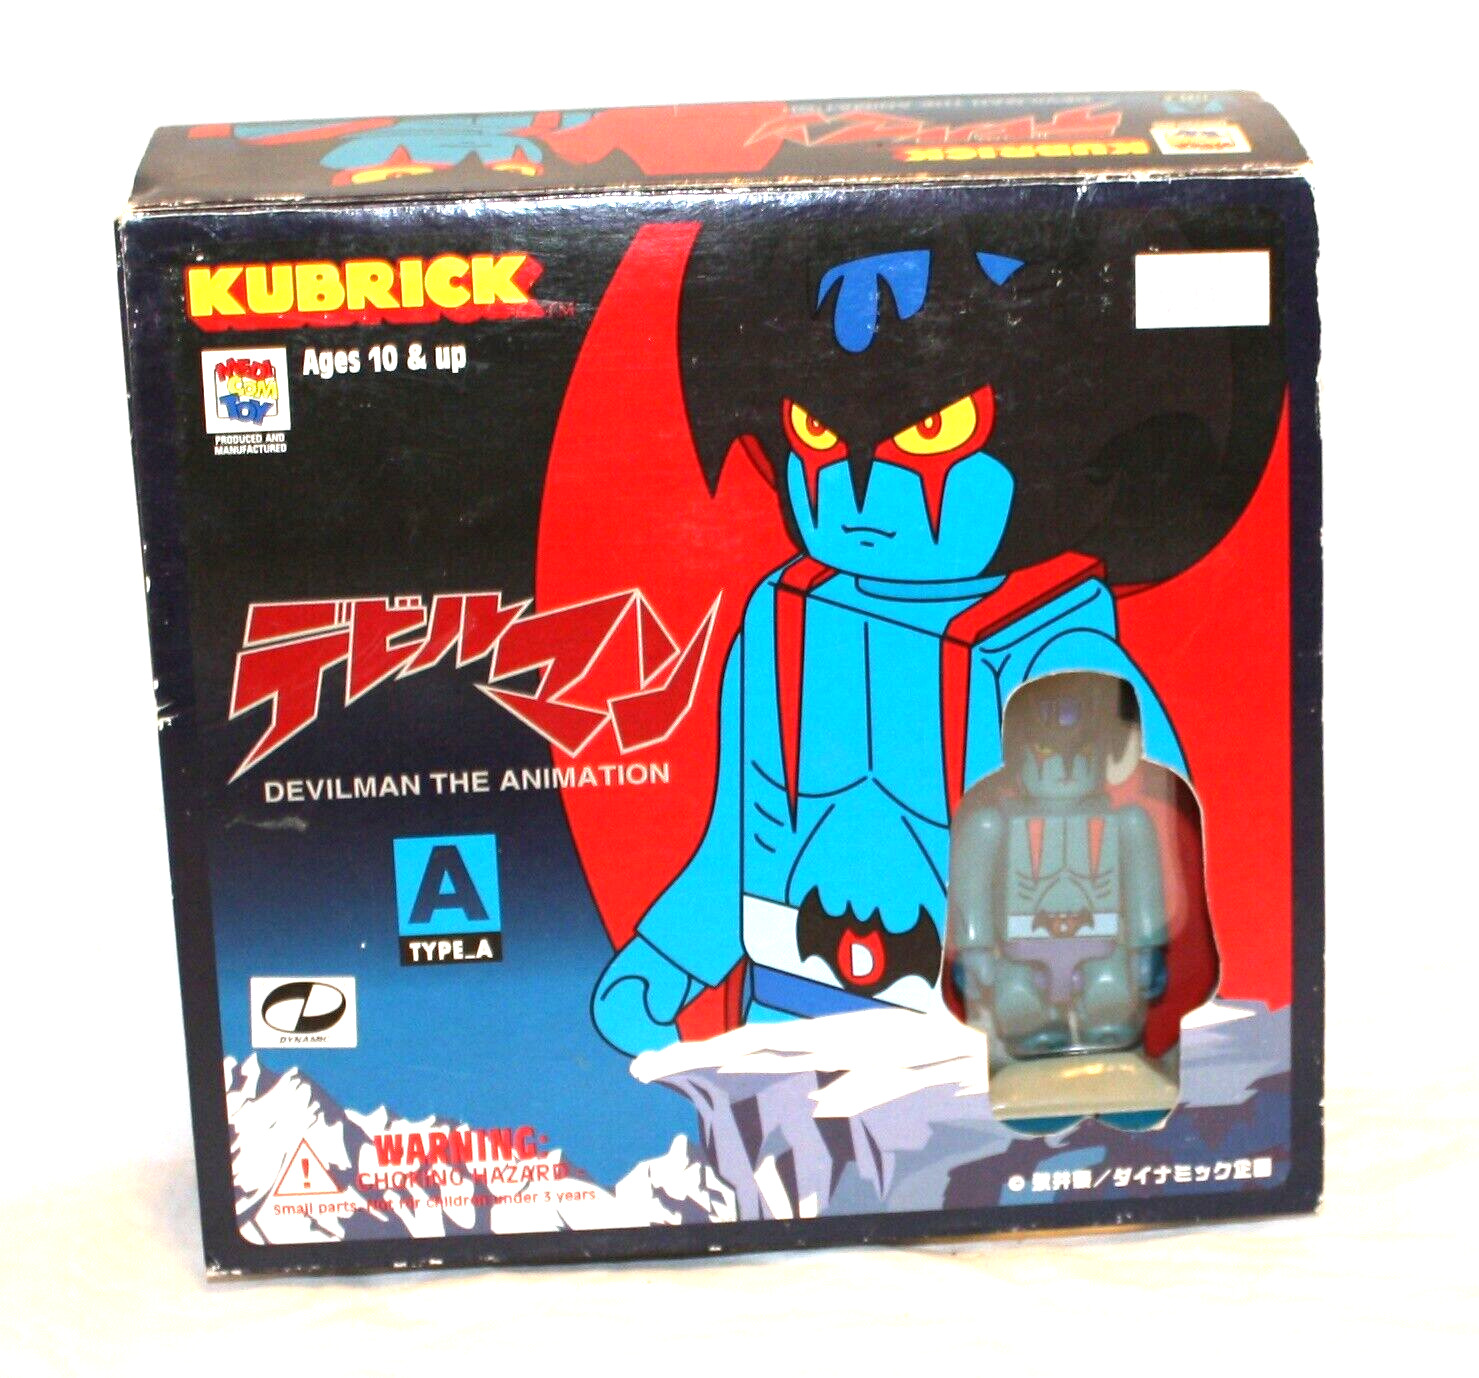 VTG Kubrick Medicom Set Type A Devilman the Animator Figure Set